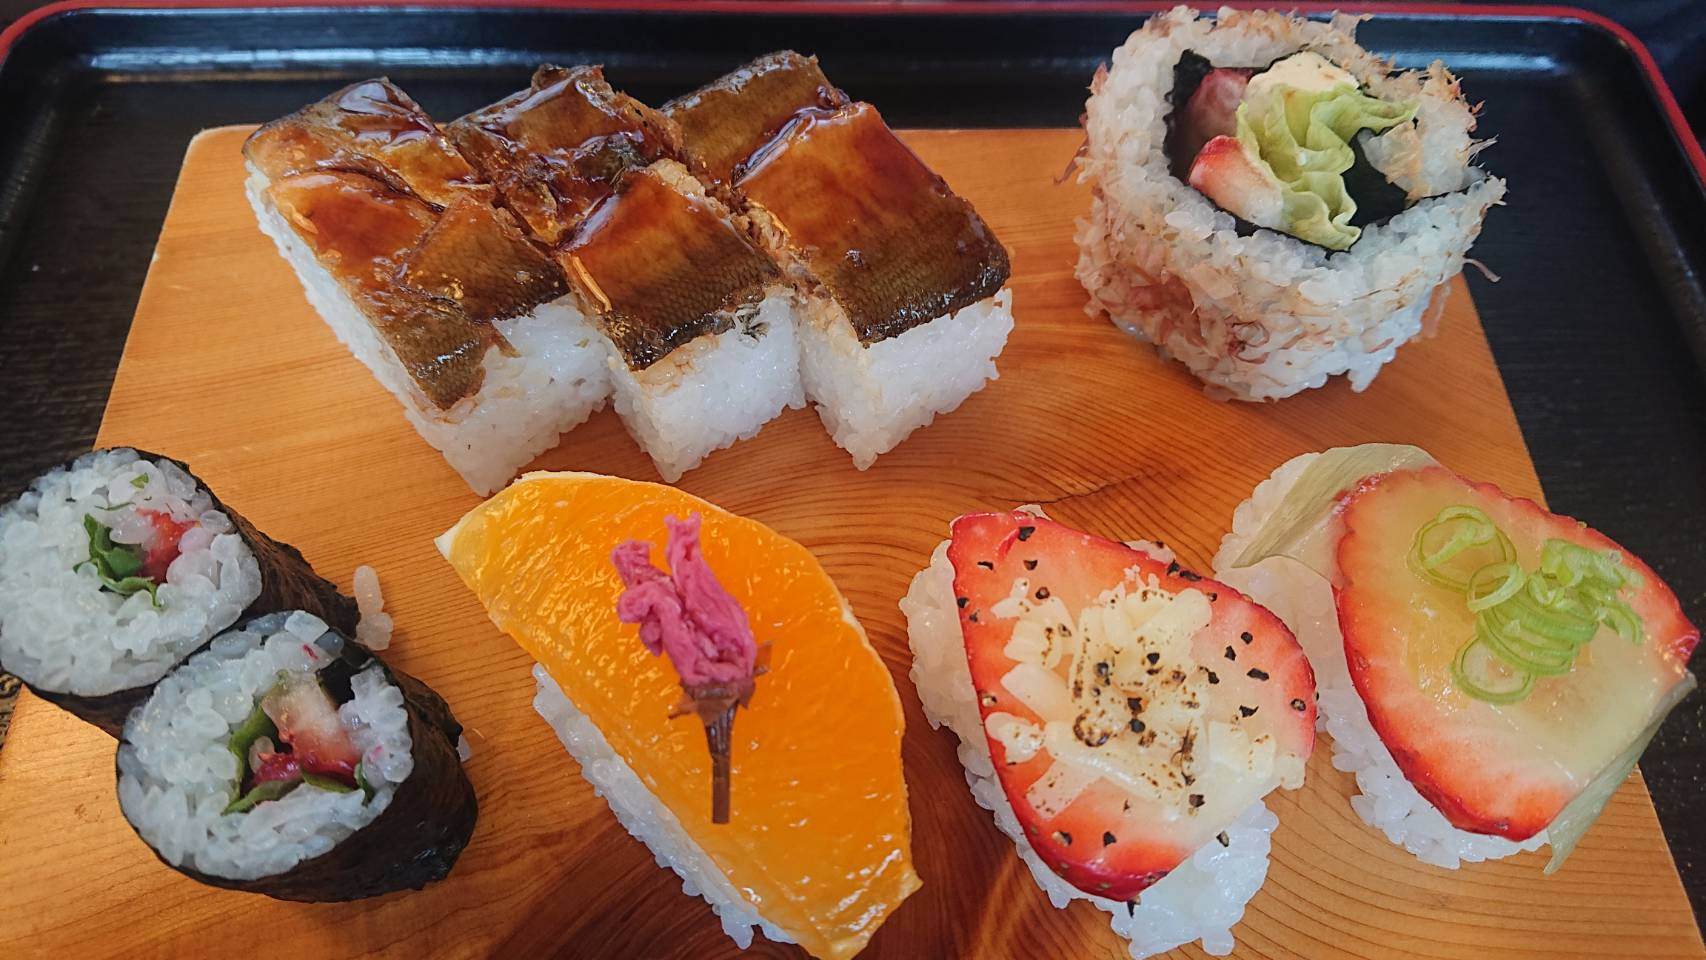 Fruit sushi, a local specialty featuring seasonally fresh fruit. 